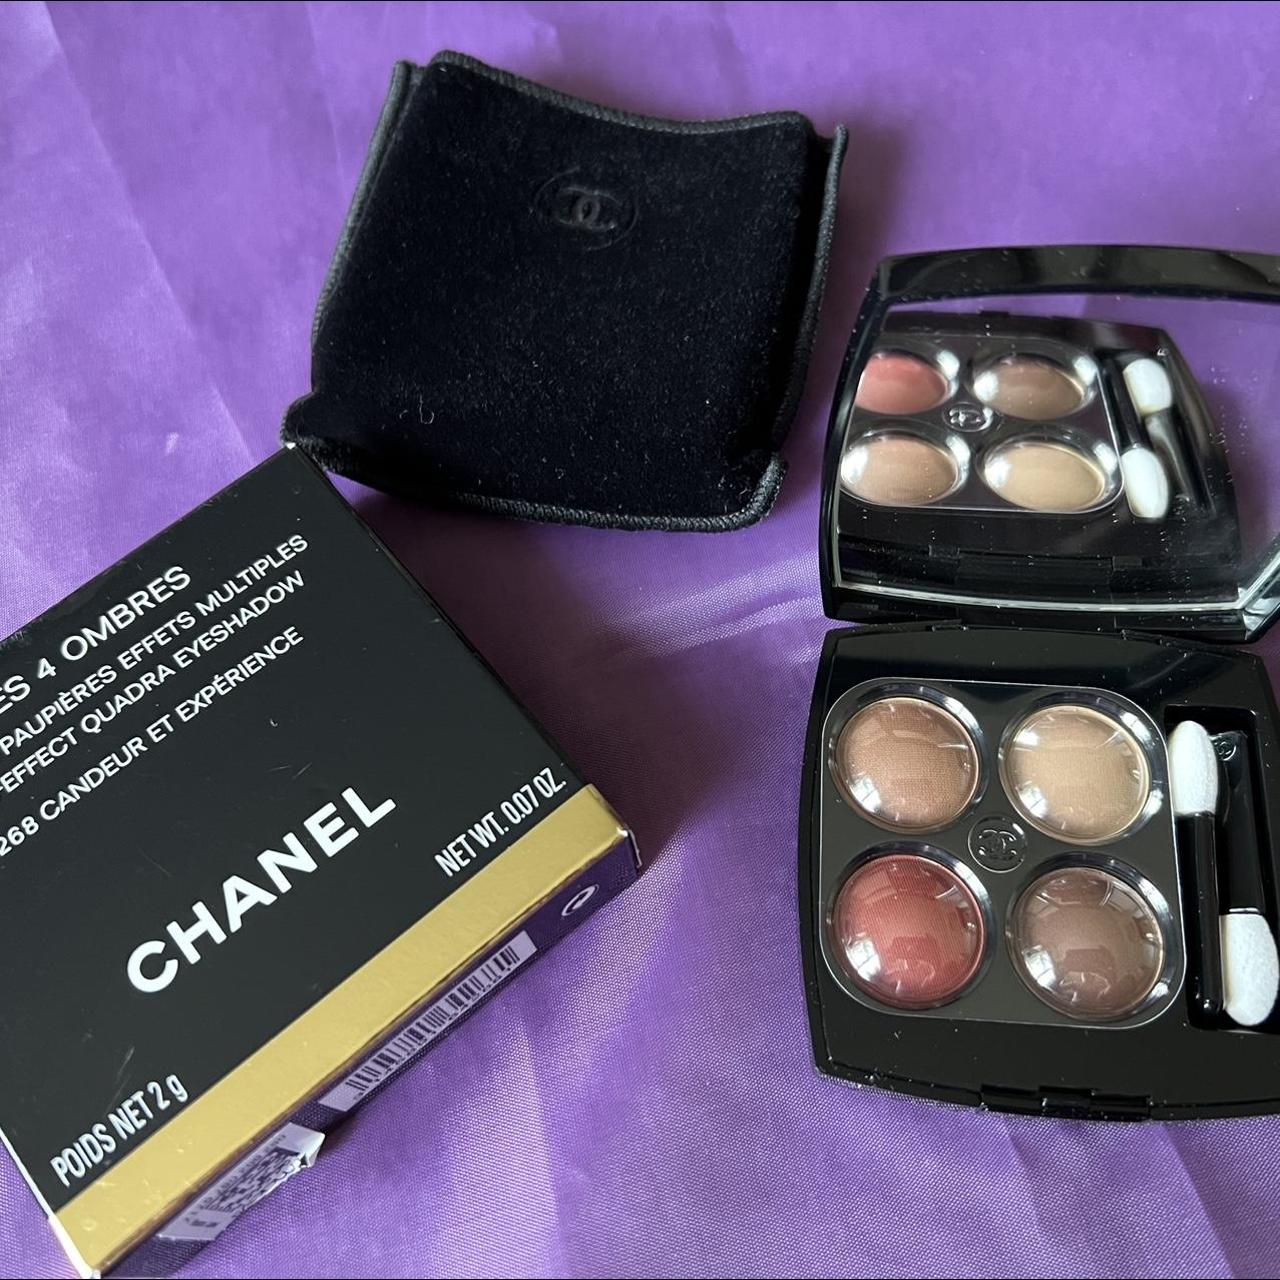 Chanel les 4 ombres multi - effect Quadra eyeshadow - Depop